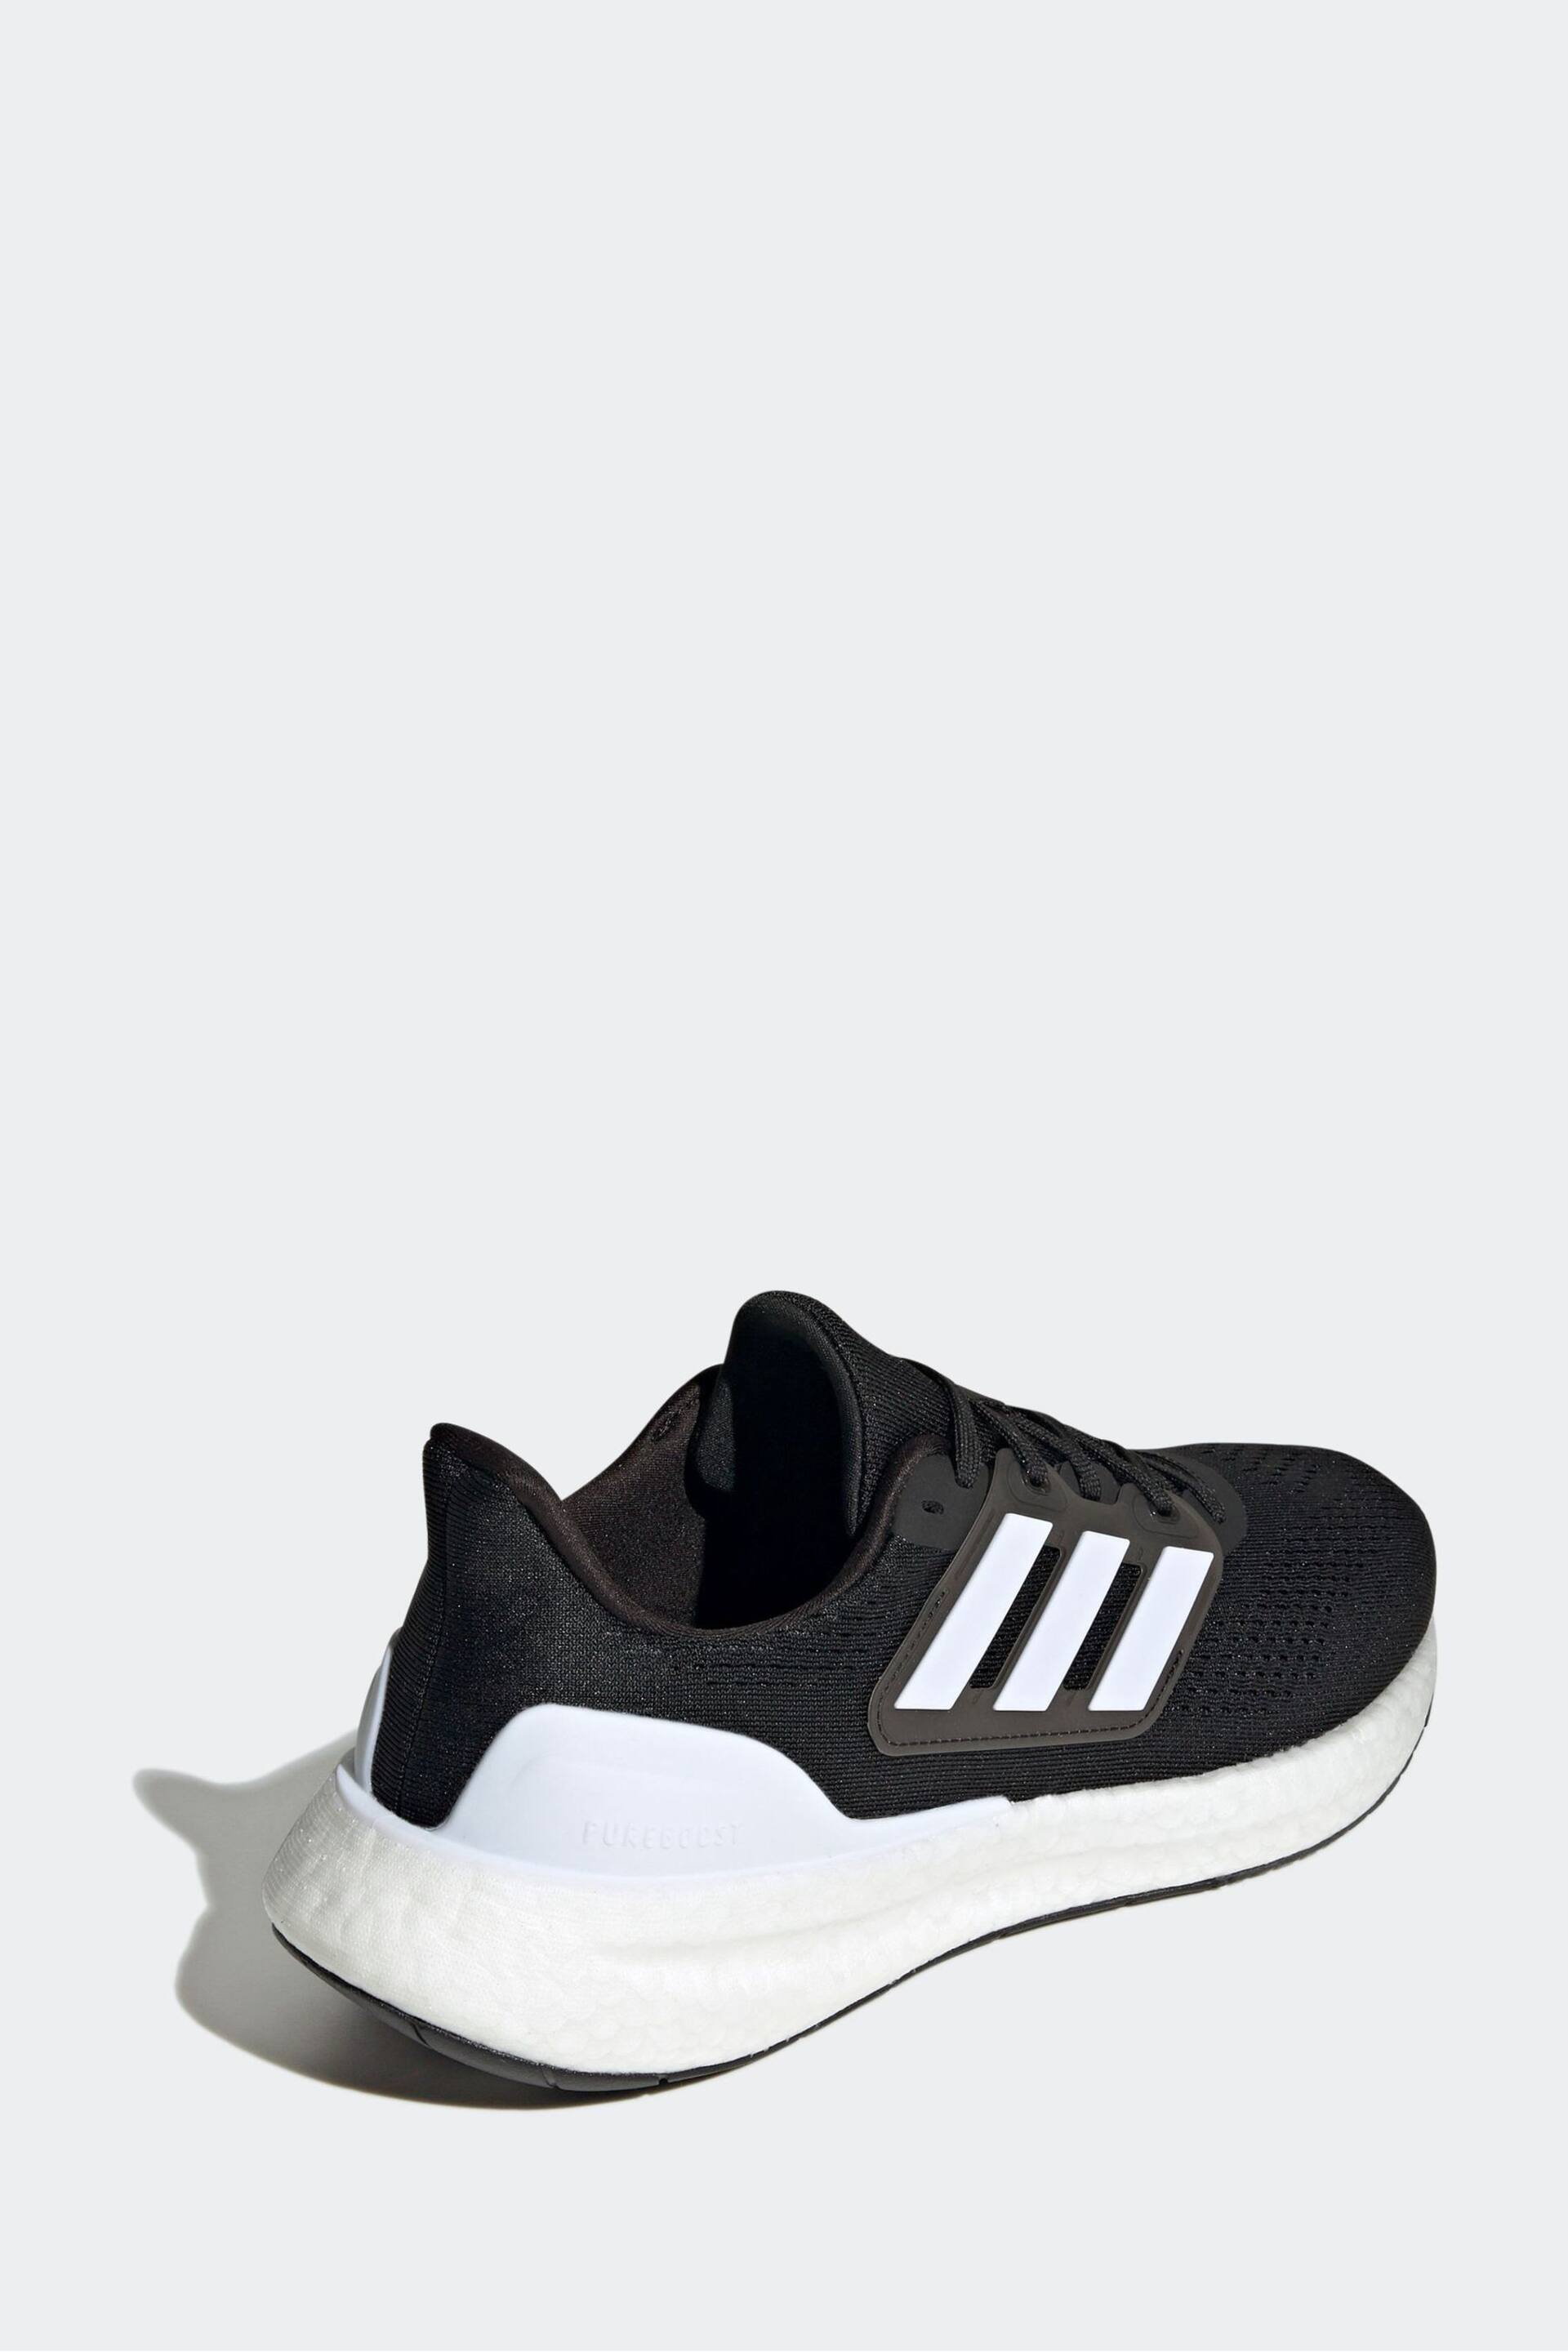 adidas Black/White Pureboost 23 Trainer - Image 4 of 9